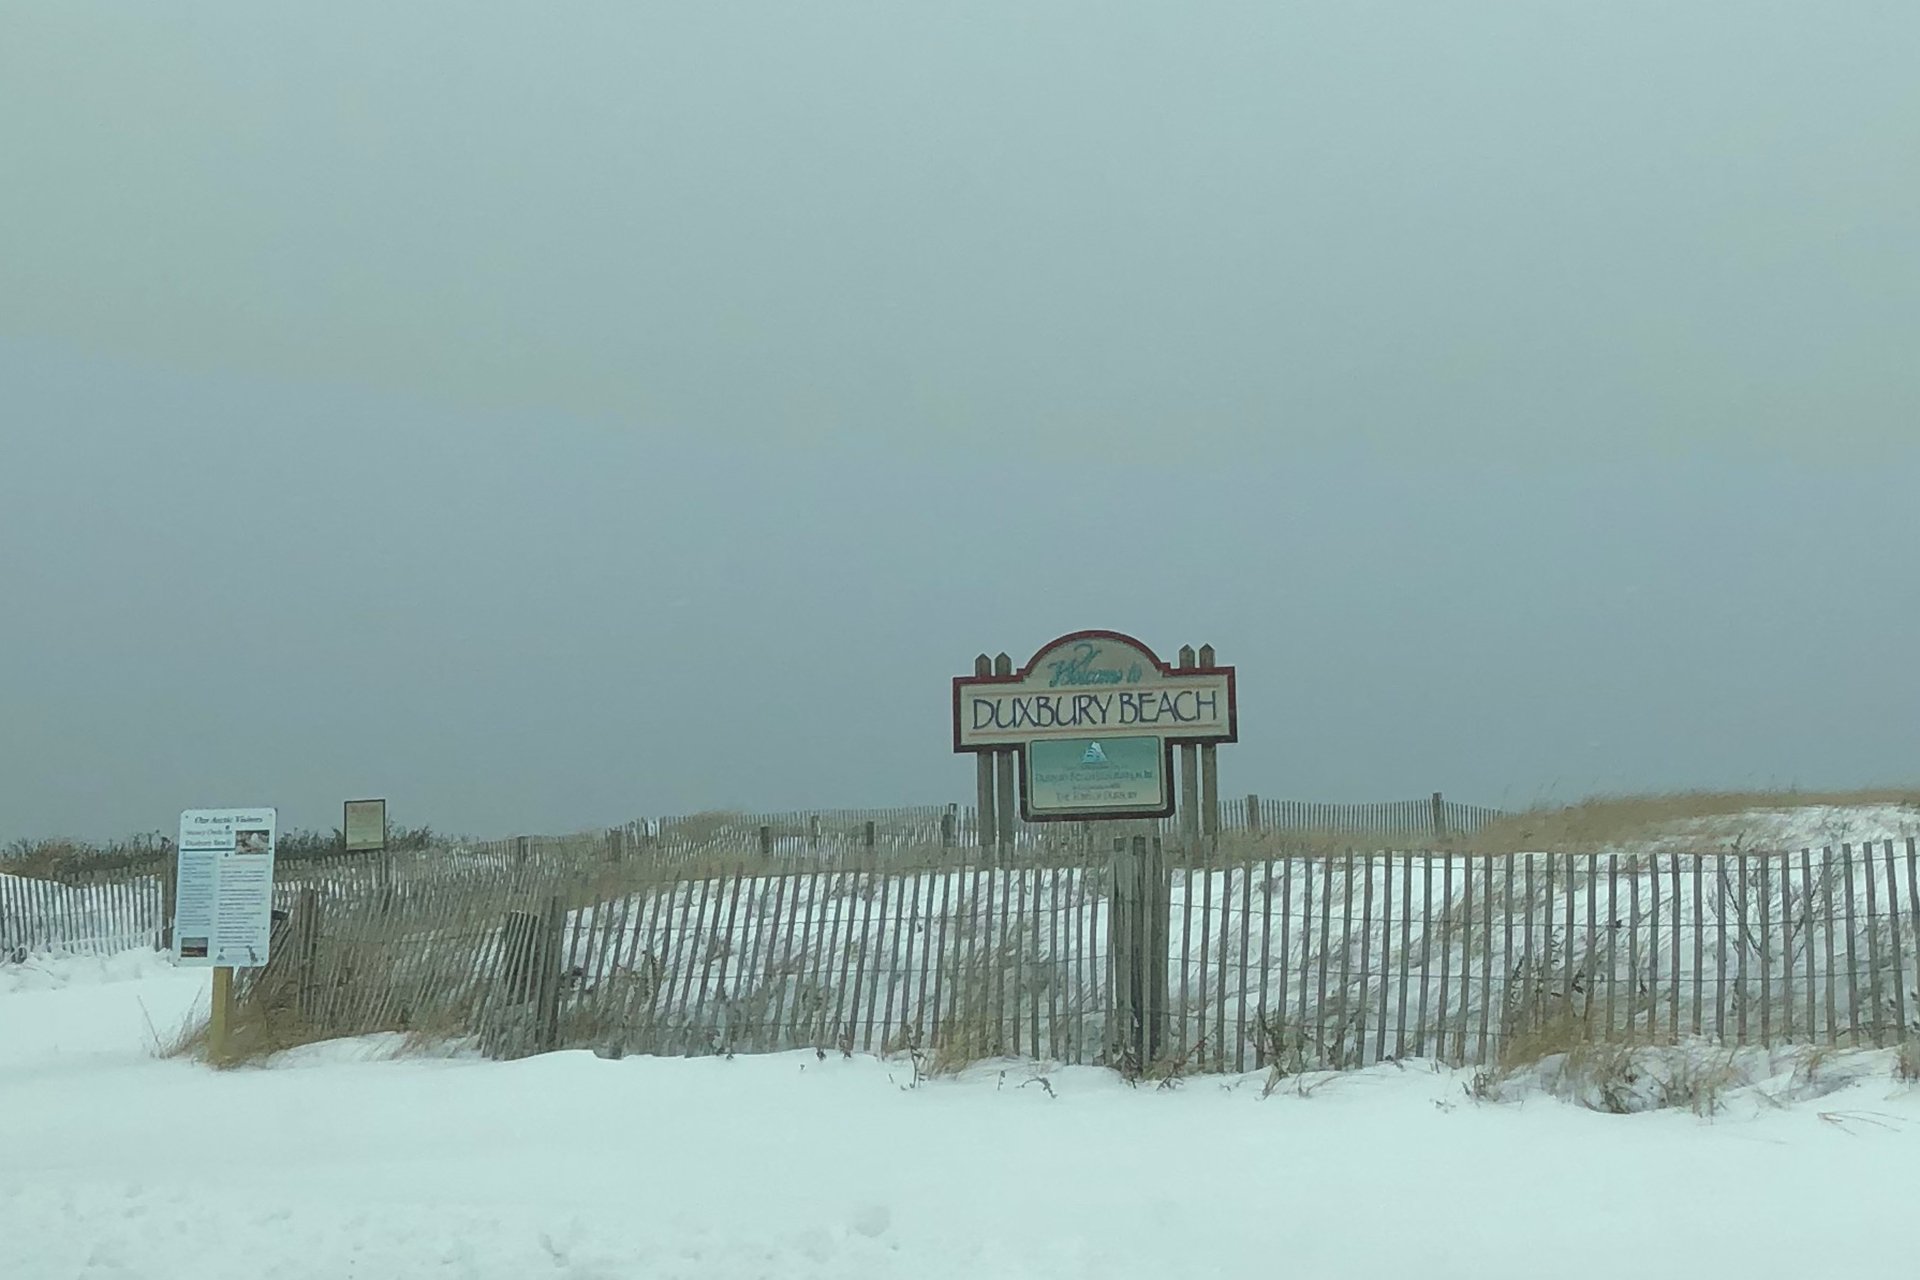 Duxbury Beach sign in winter